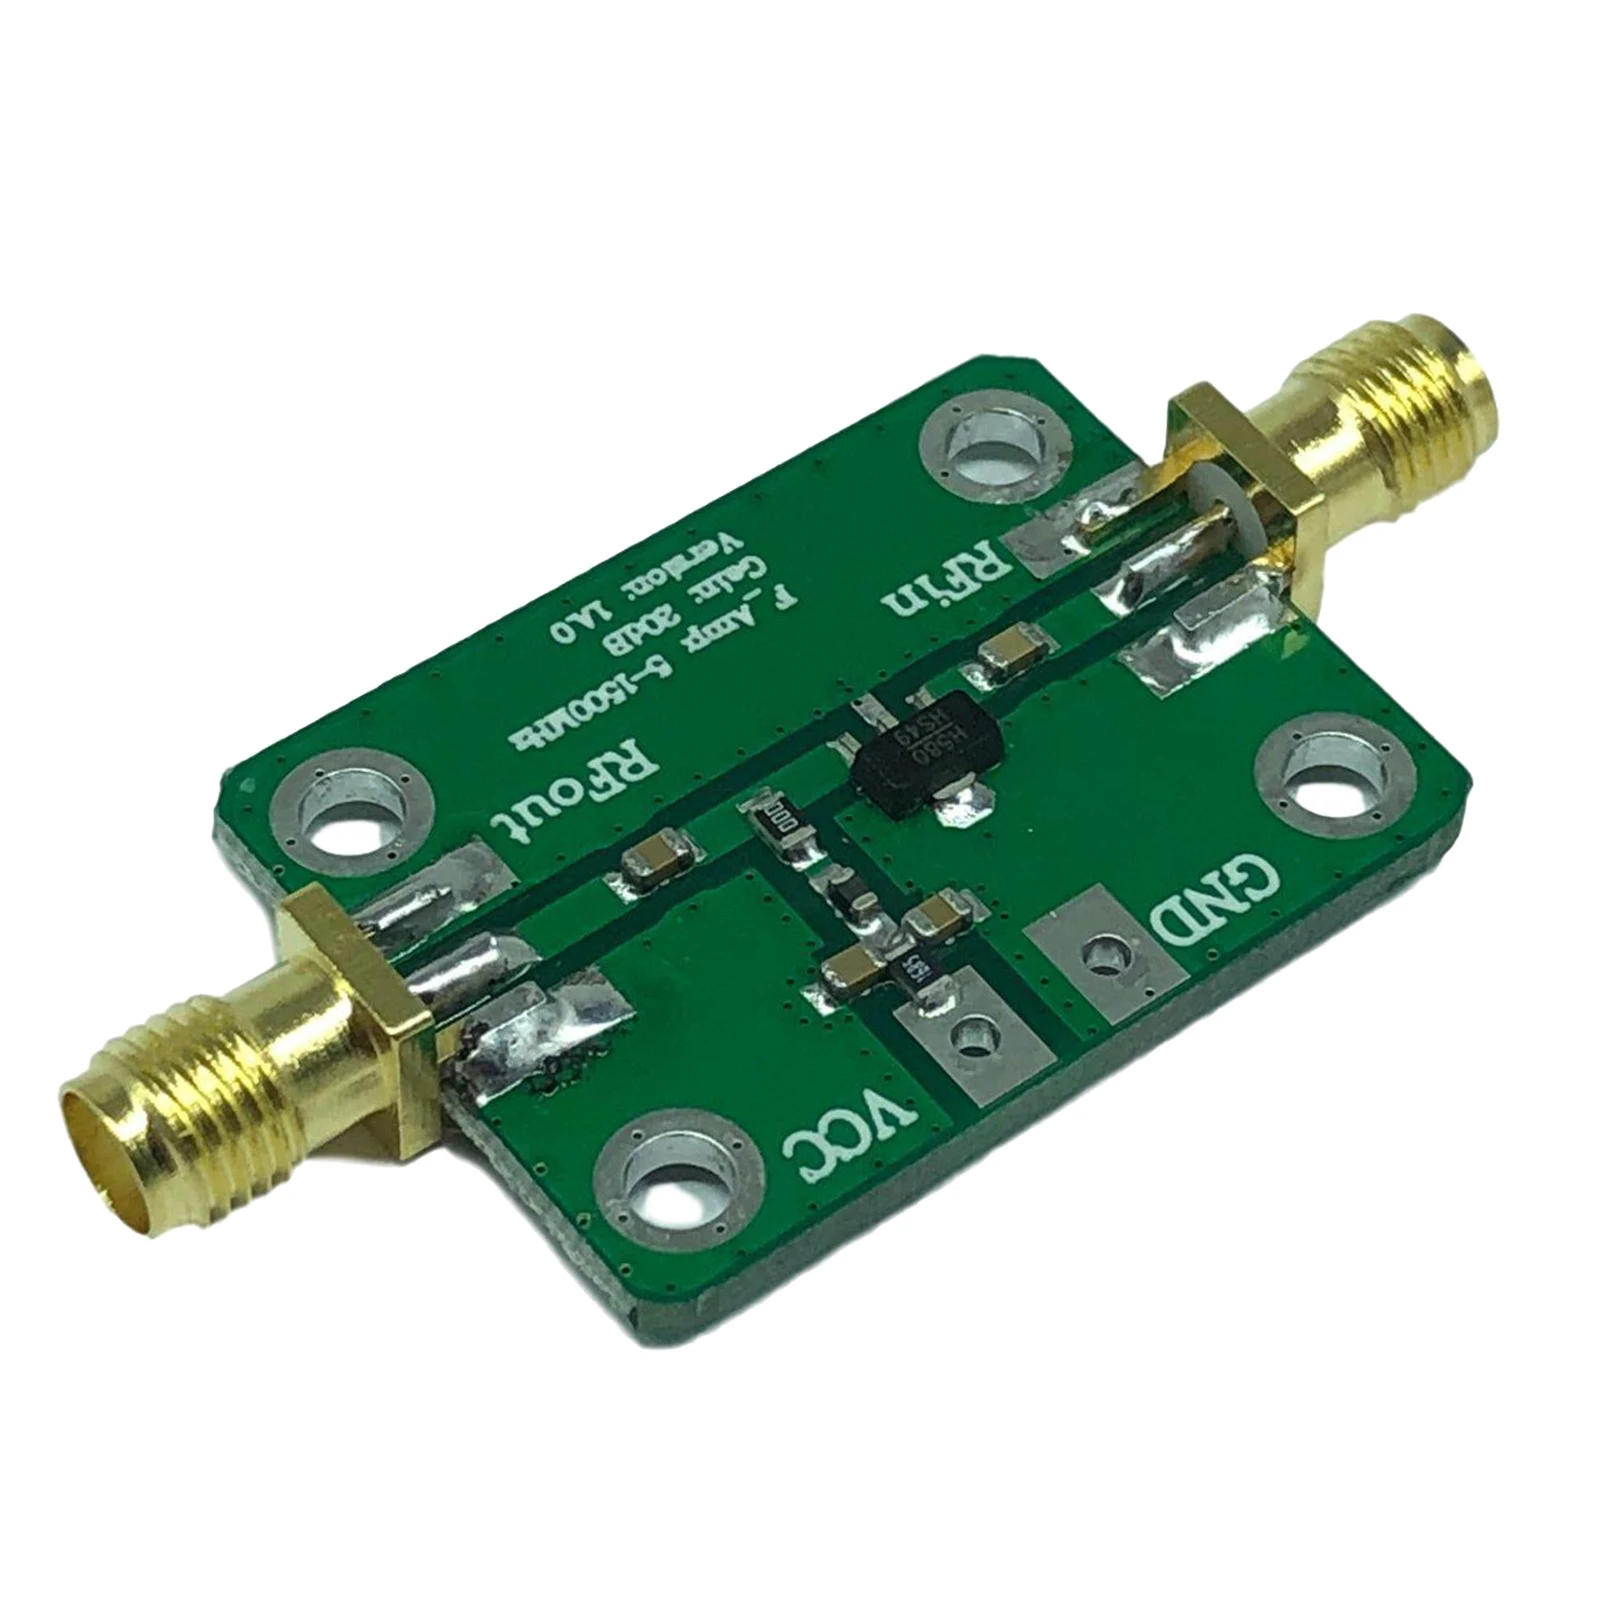 Low Noise Signal Receiver RF Amplifier Gain Module LNA Wideband 5-1500mhz 20dB Gain Broadband for FM Radio TV Signal Amplifier